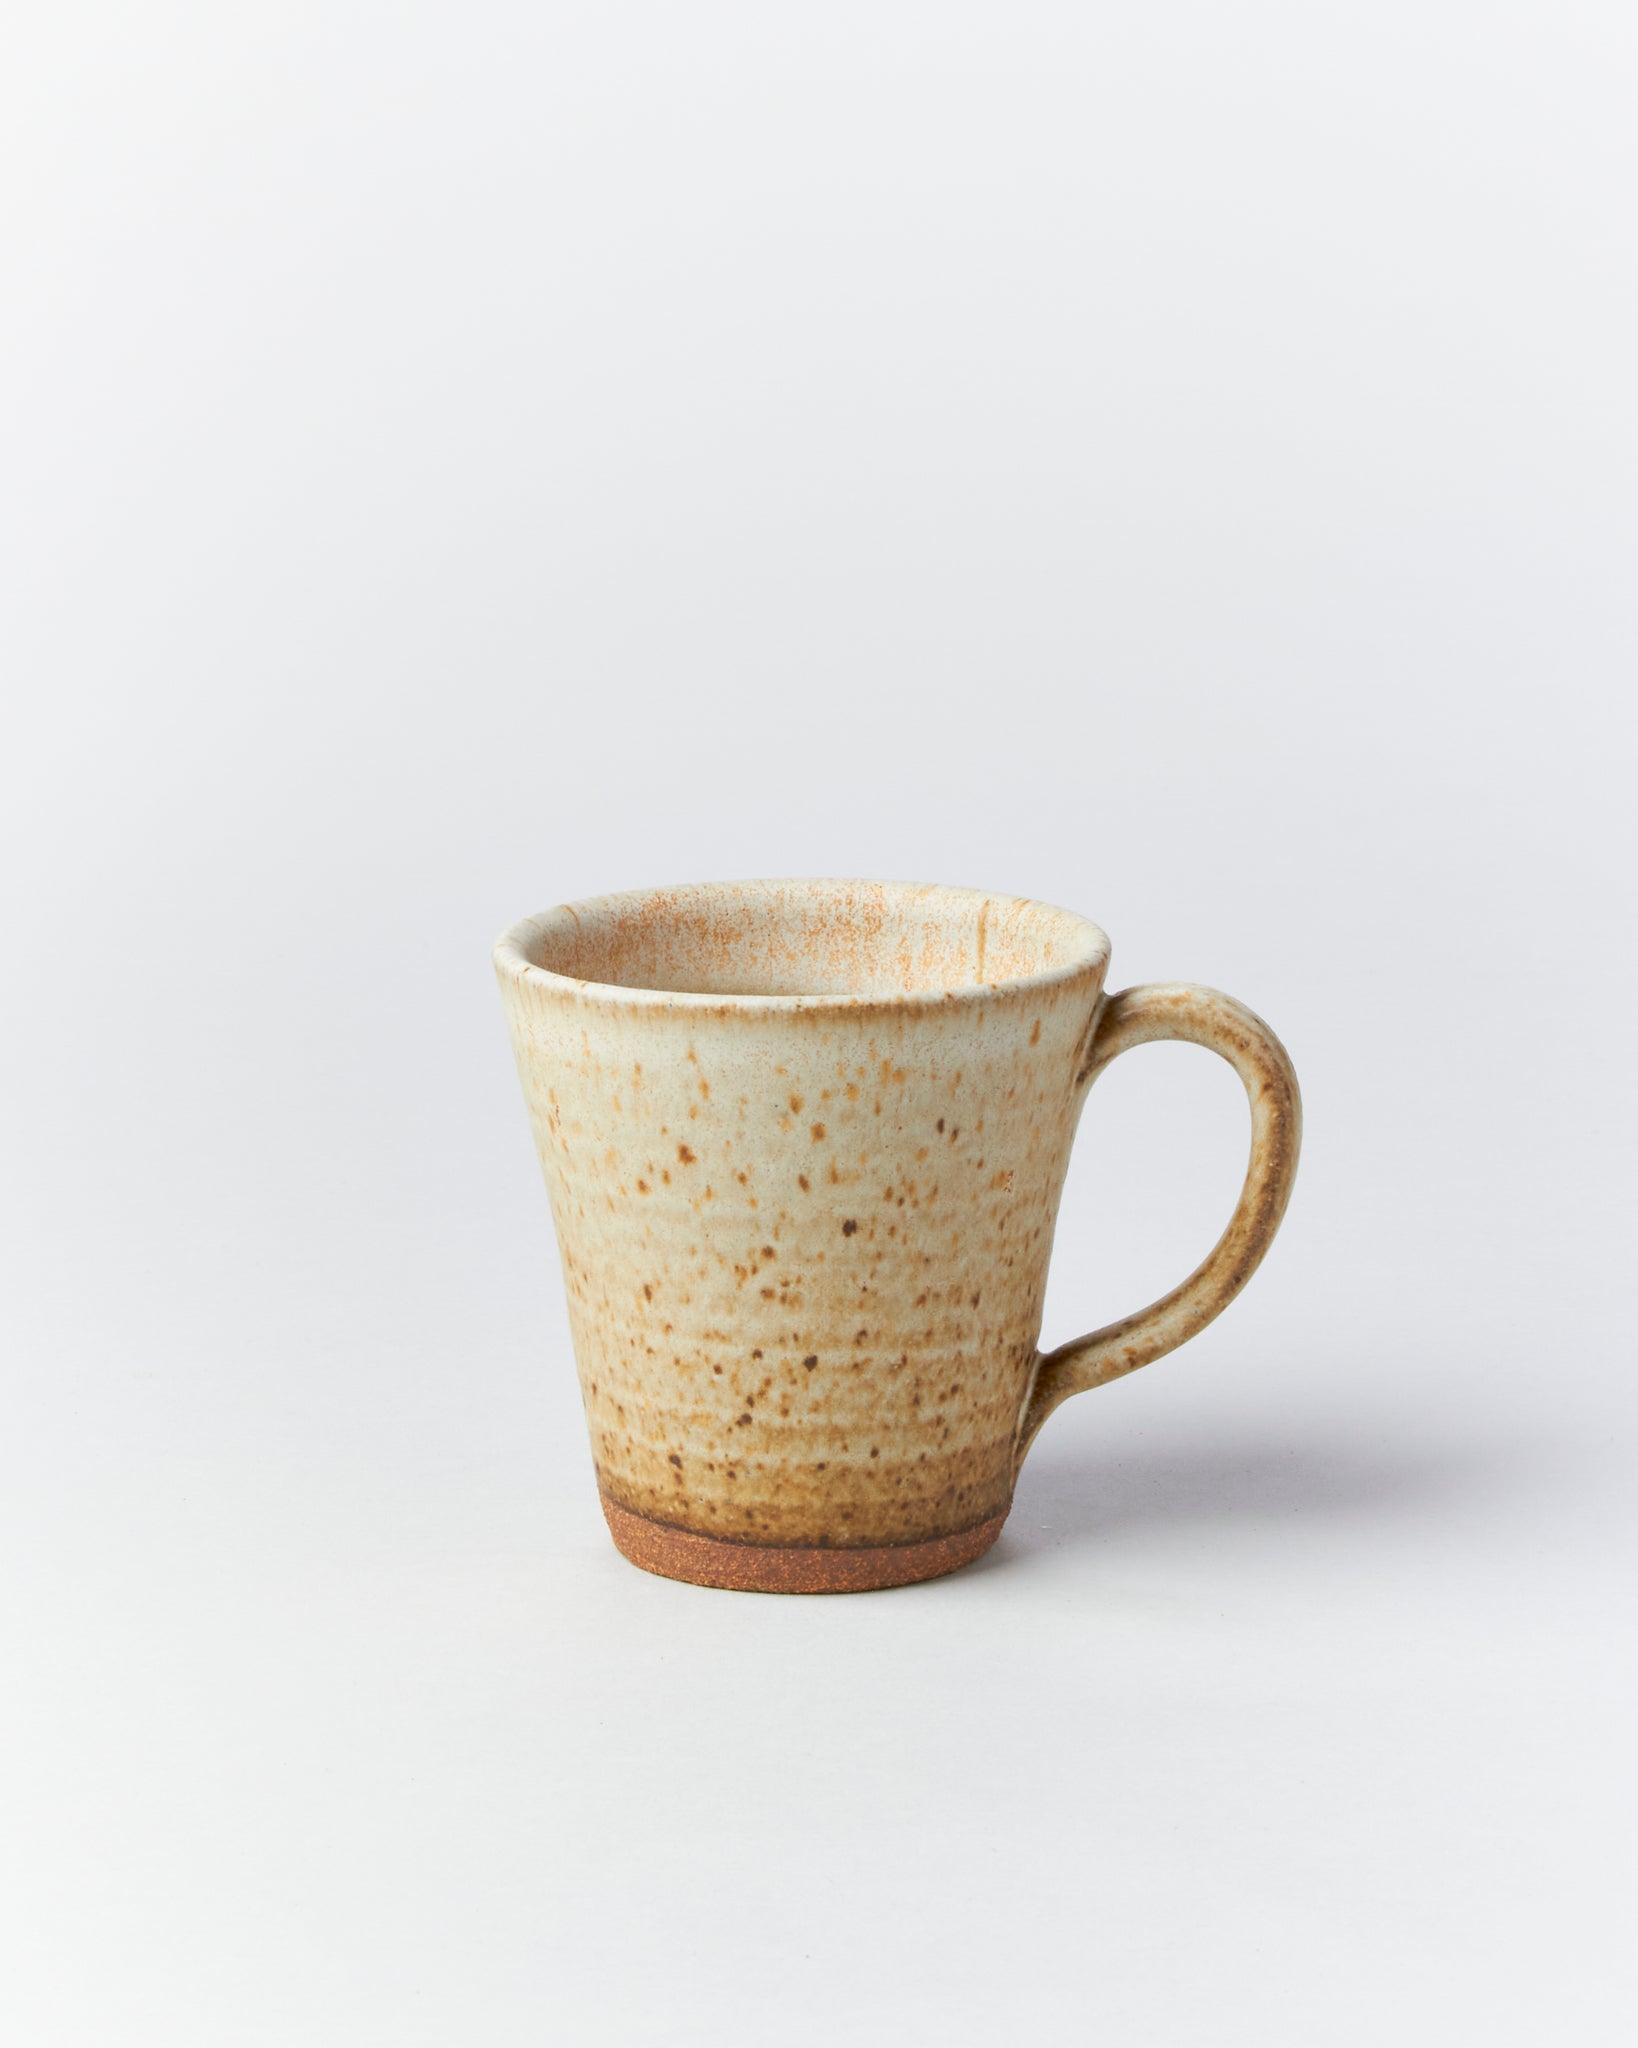 Kati Von Lehman 8oz Coffee Mug in Rose